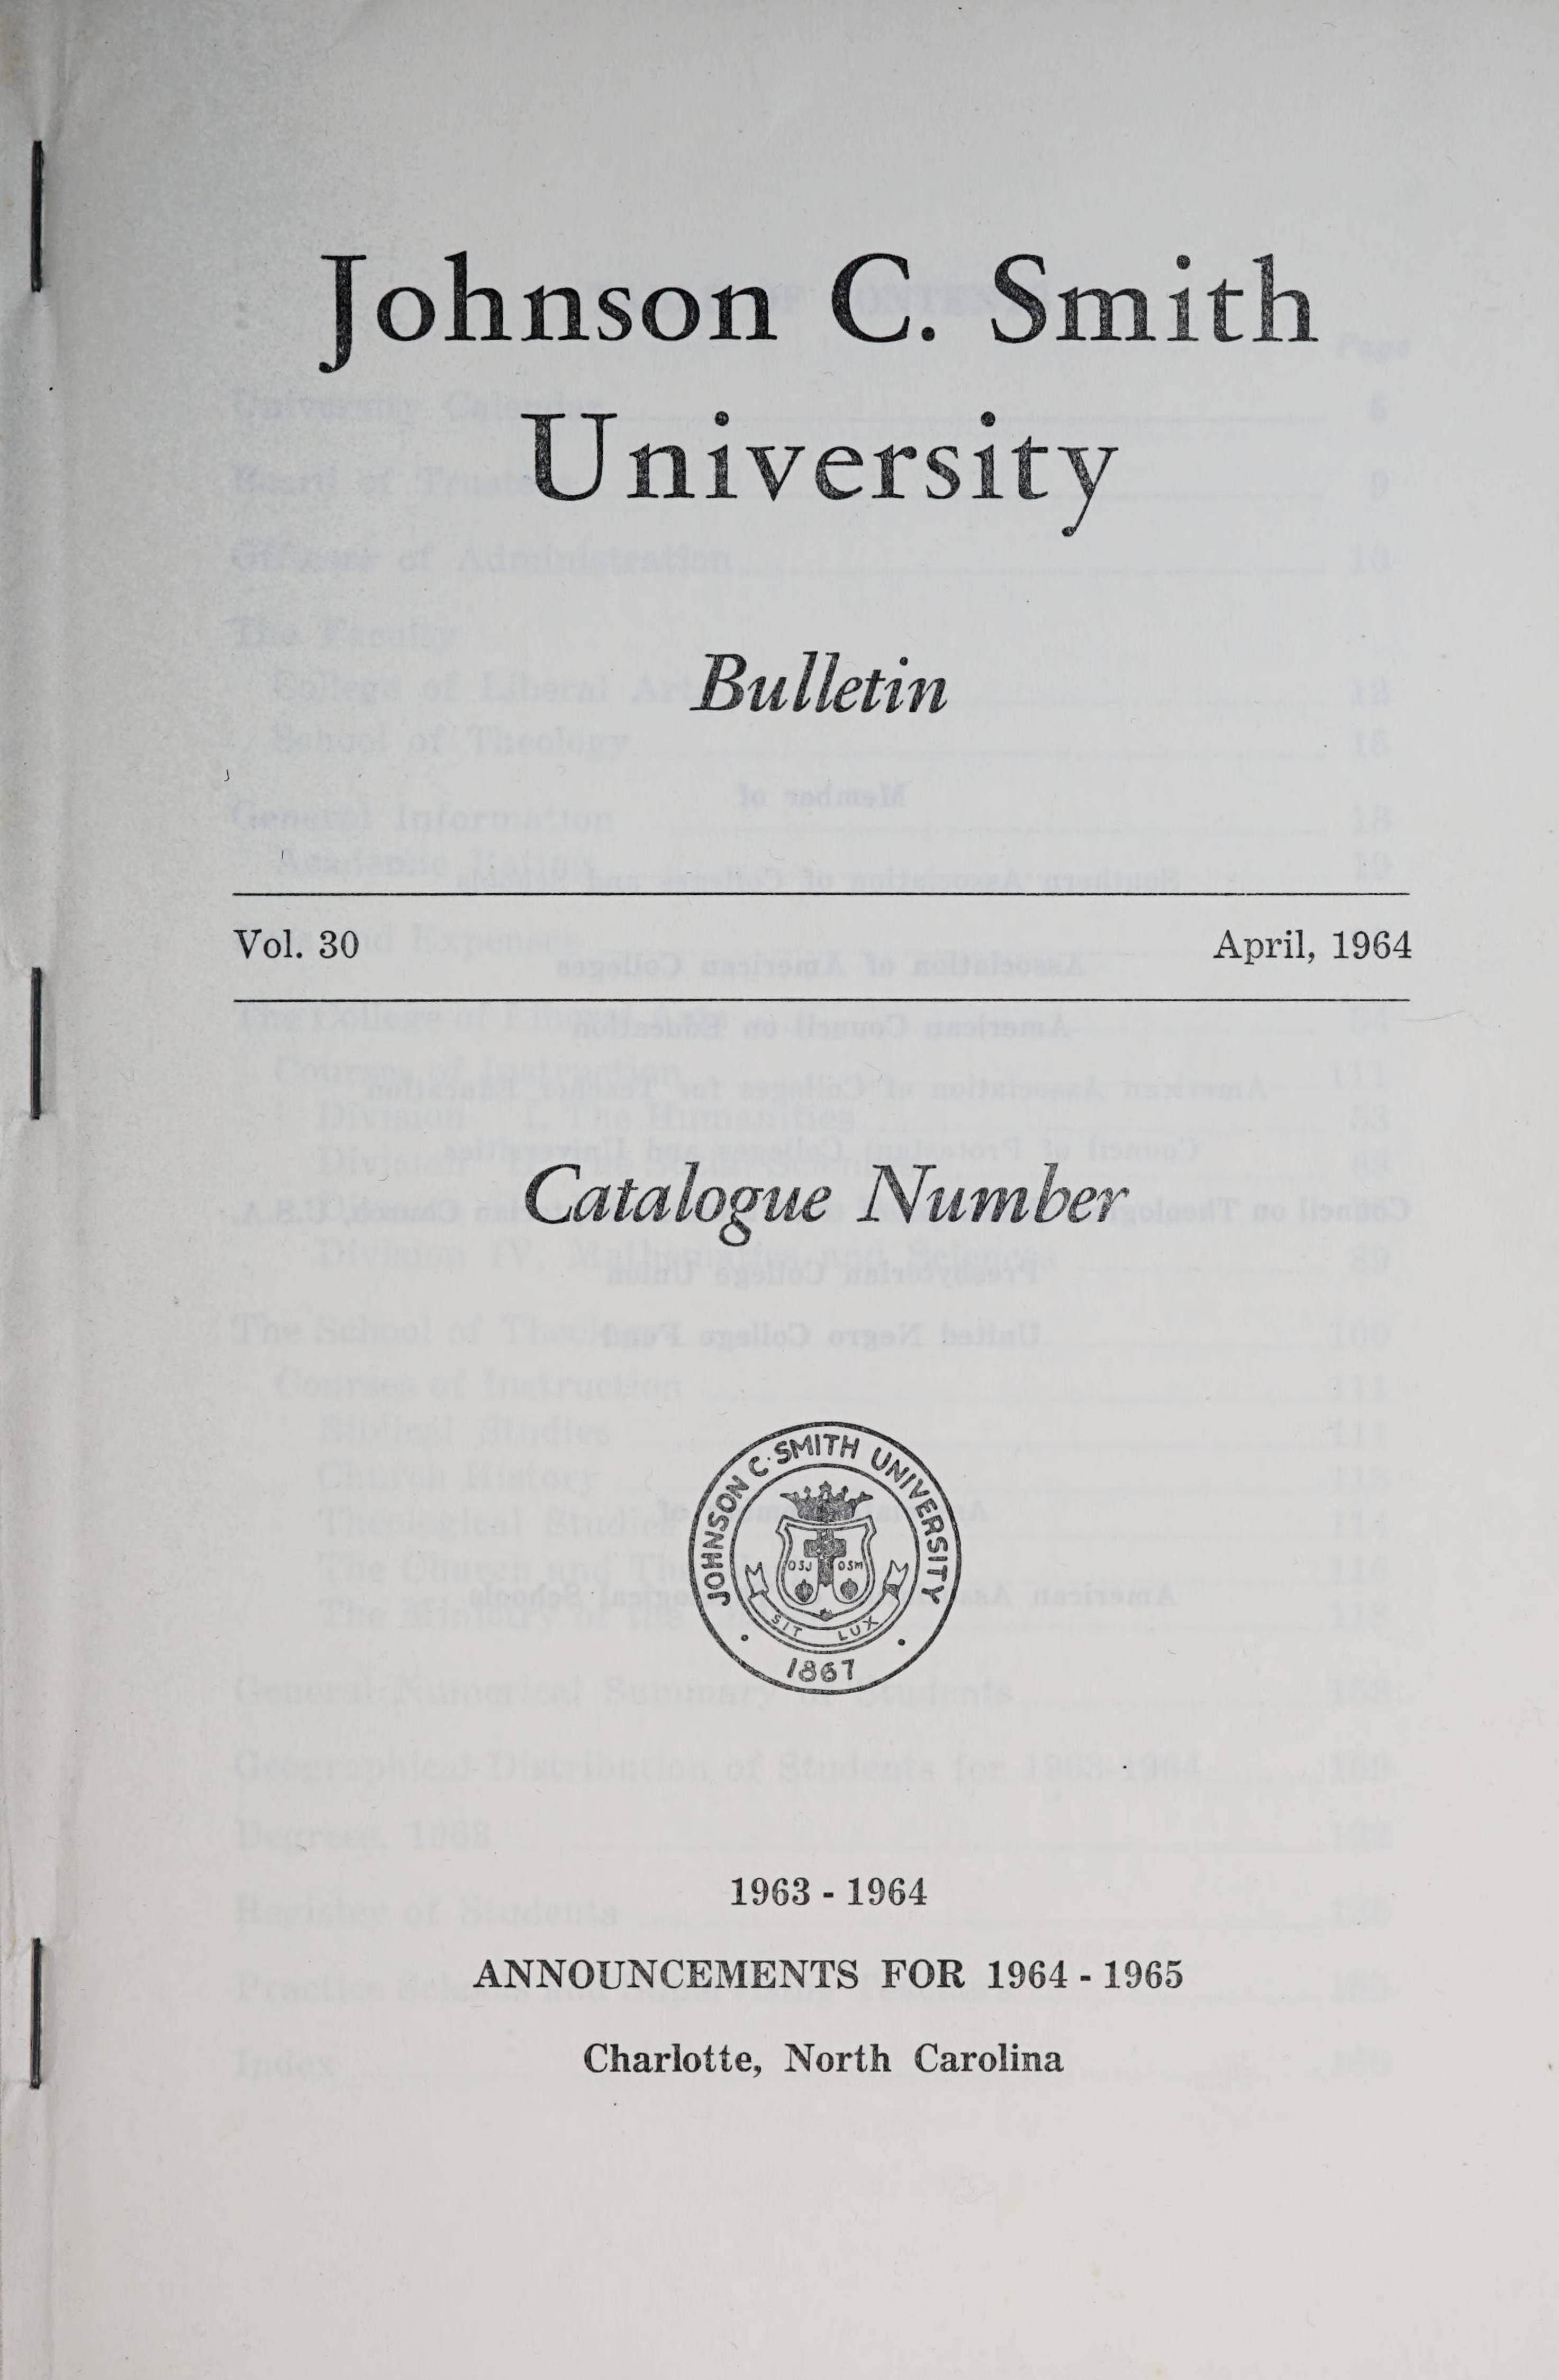 Johnson C. Smith University Bulletin [1964]